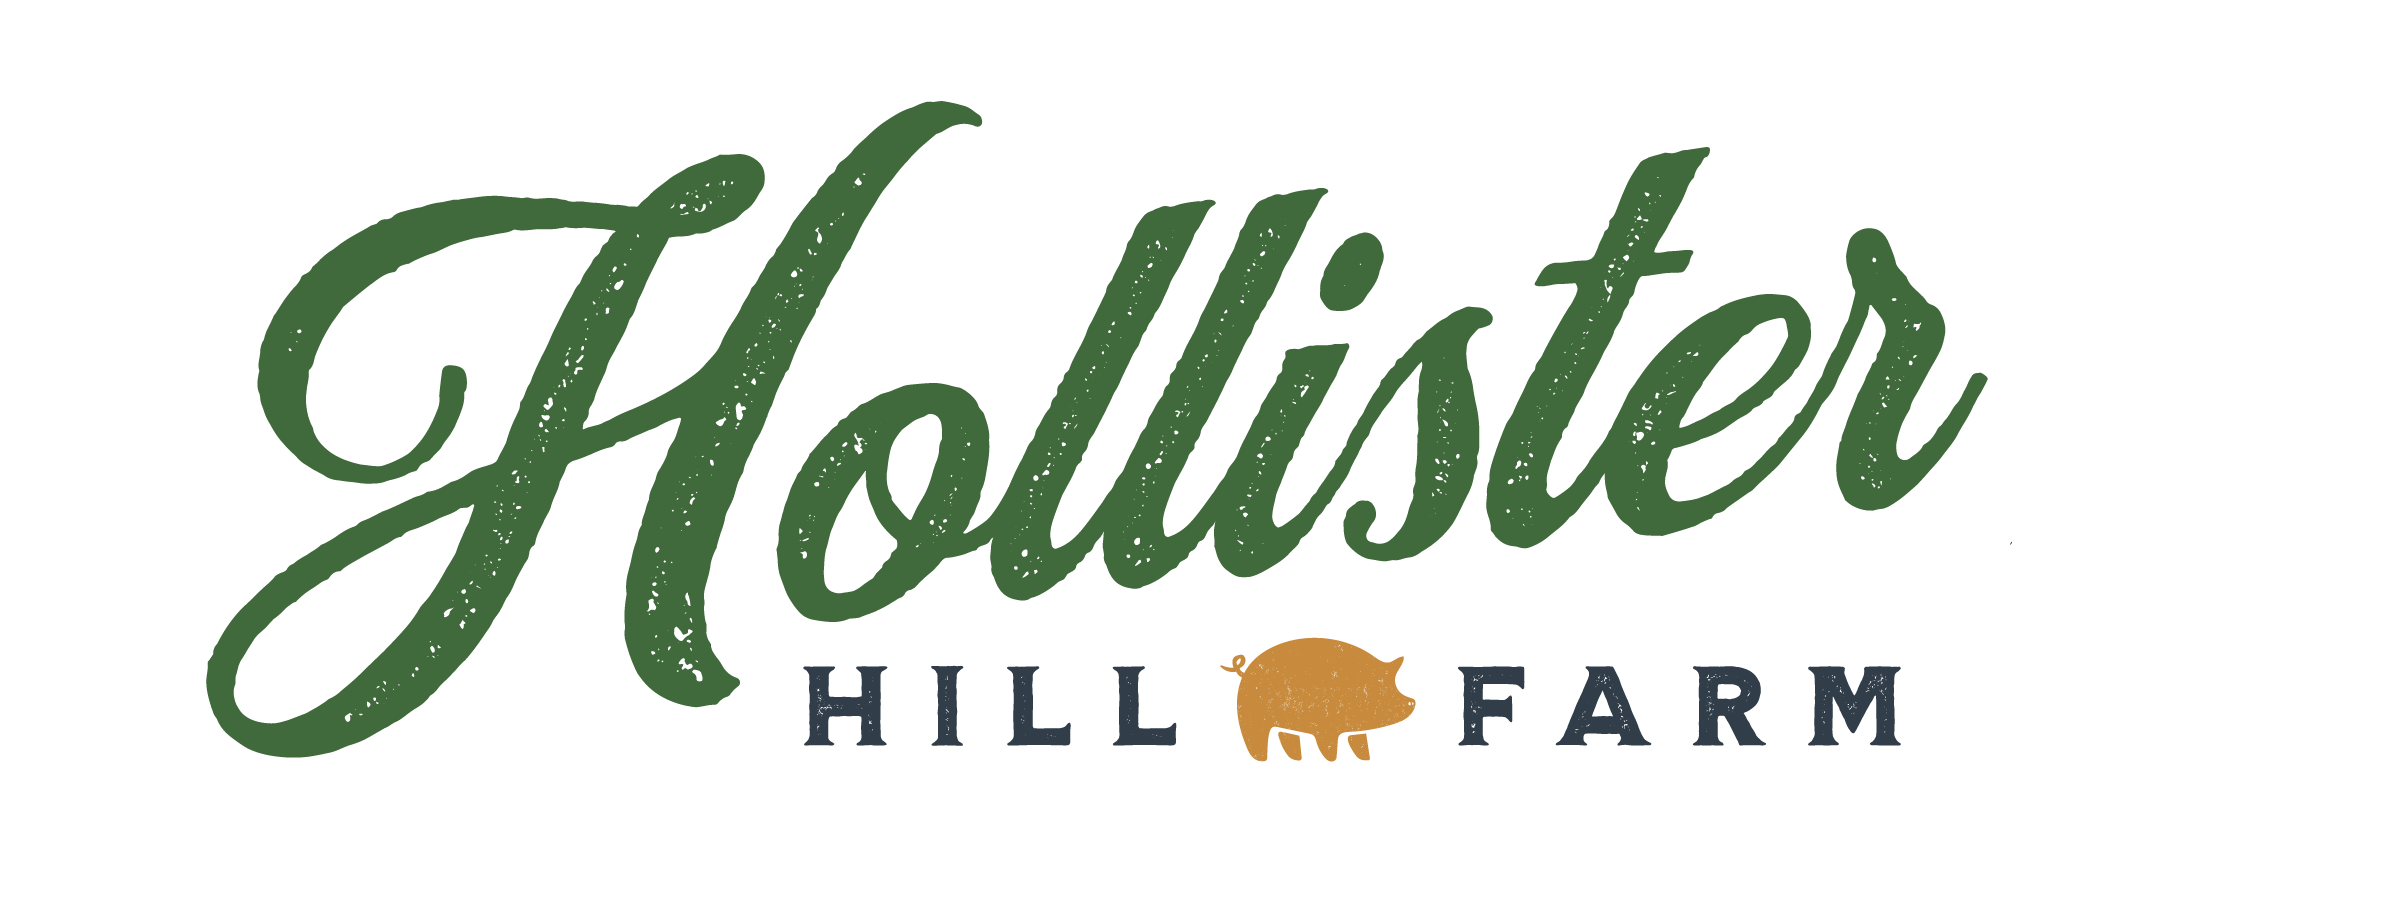 Hollister Hill Farm logo